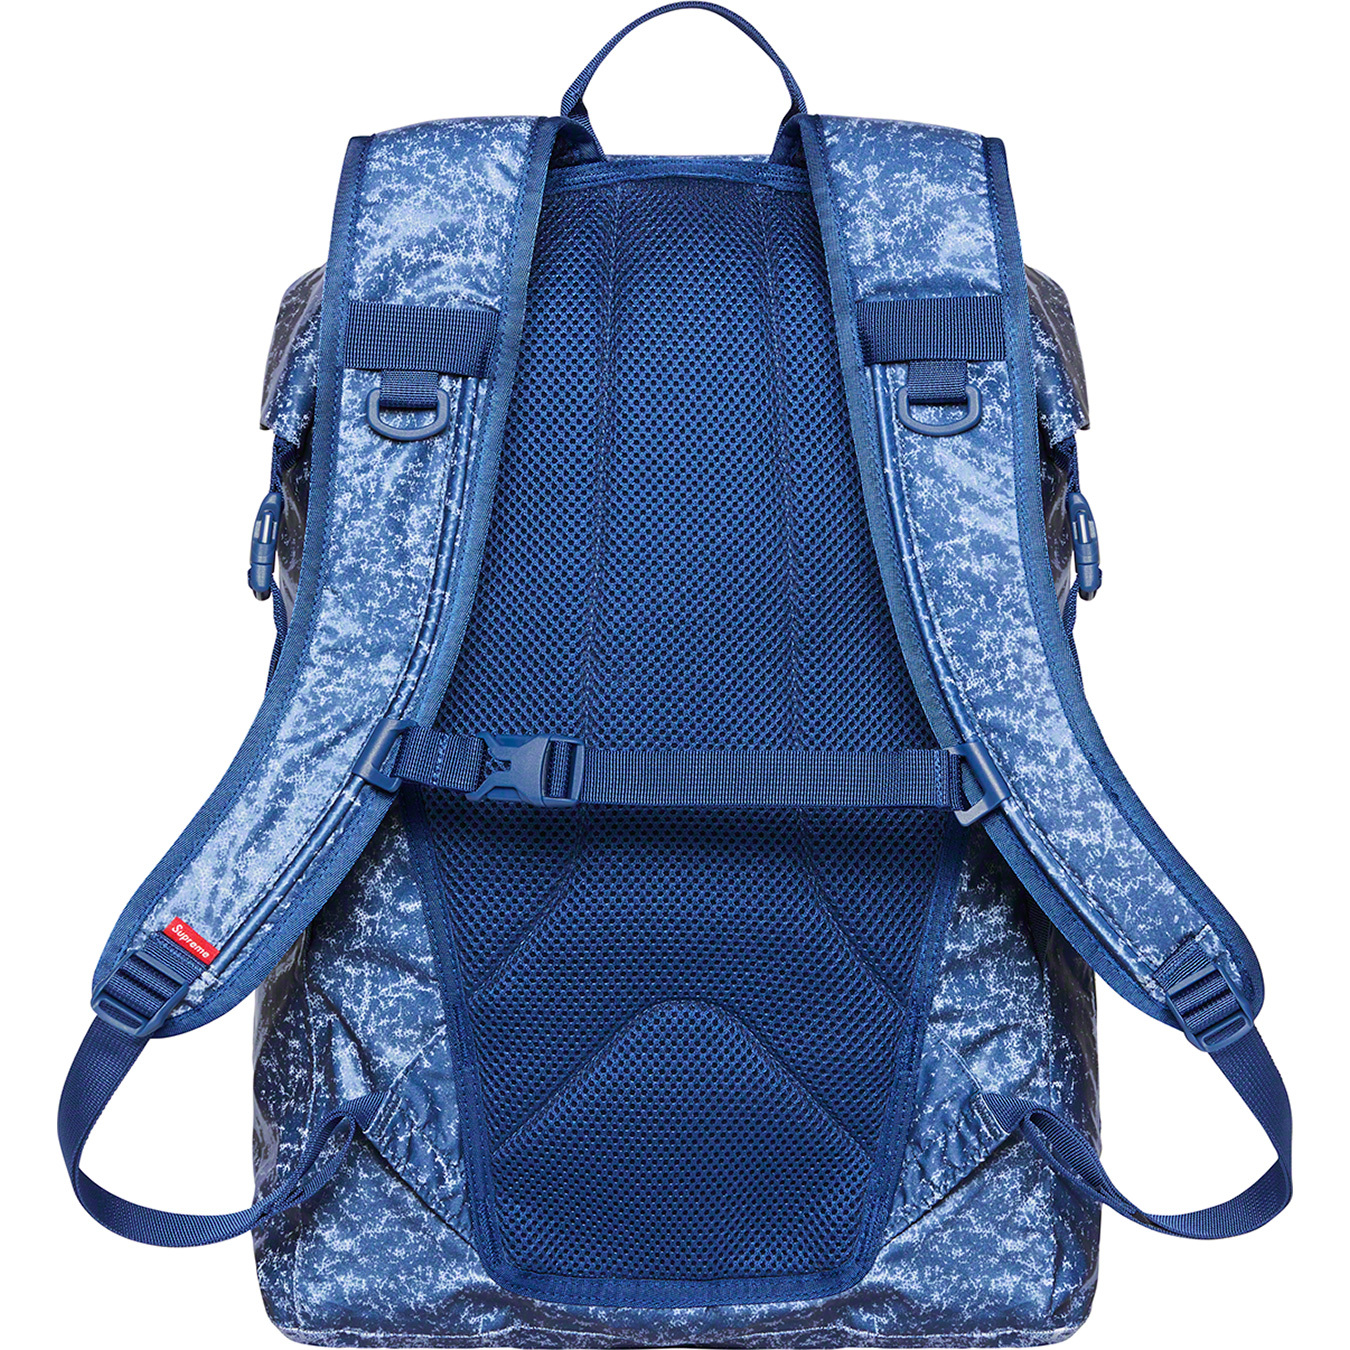 Waterproof Reflective Speckled Backpack - Supreme Community